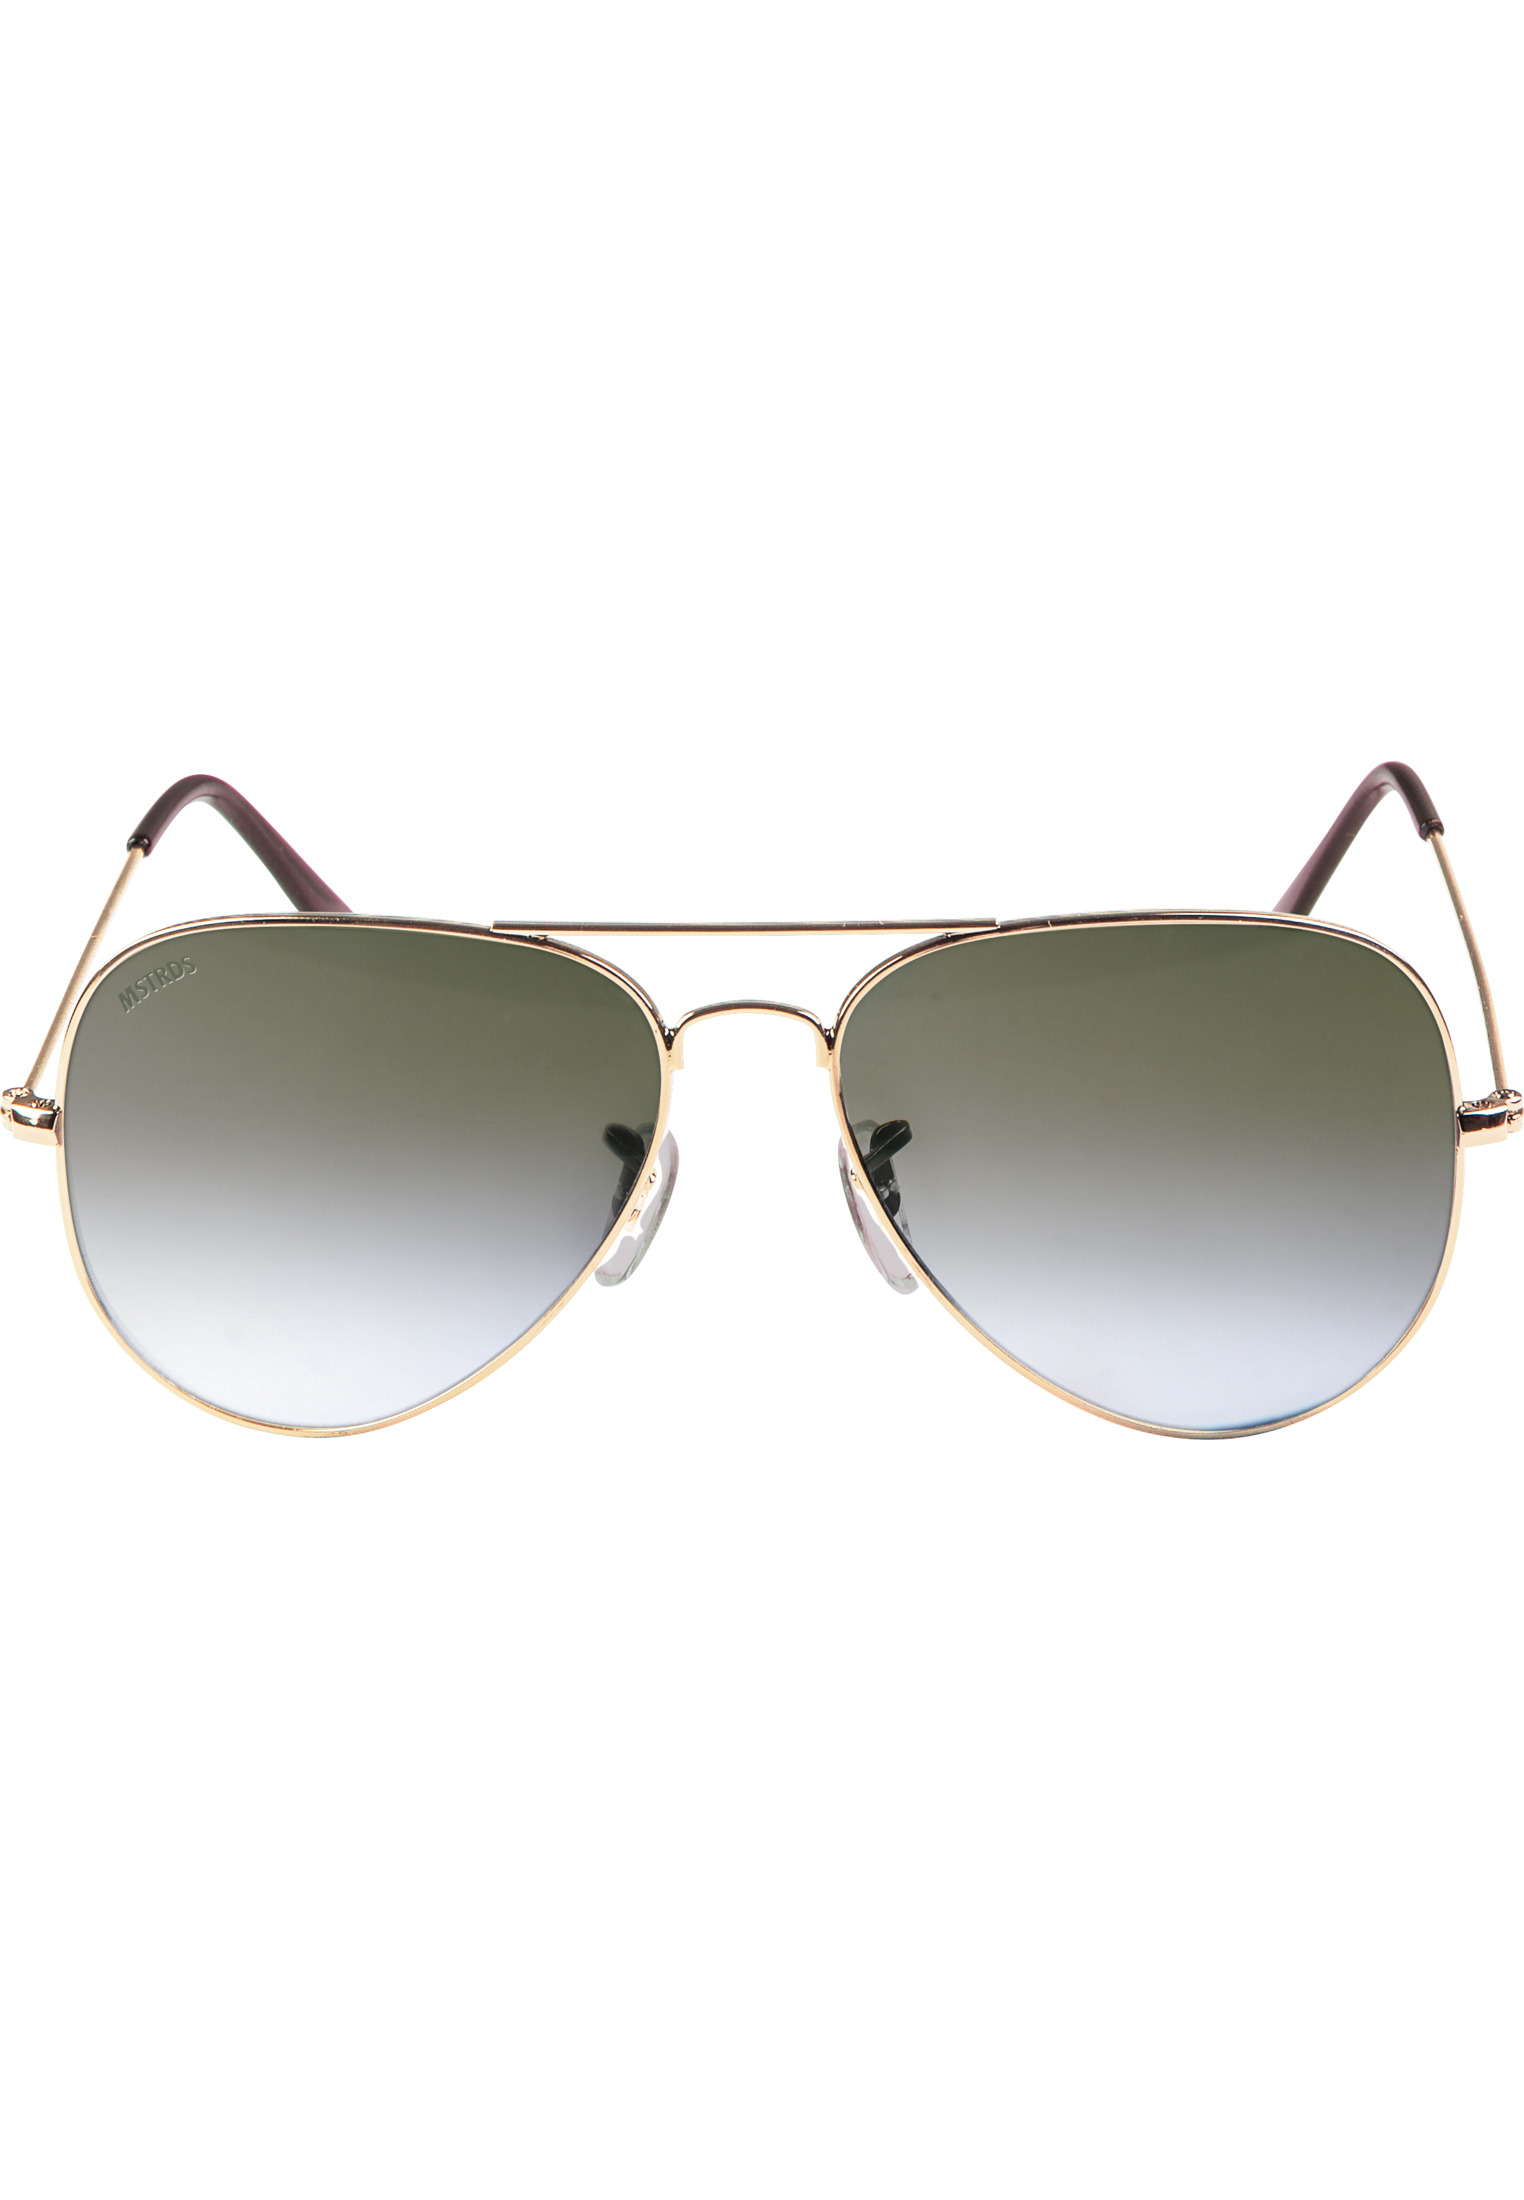 Sunglasses PureAv Gold/Brown